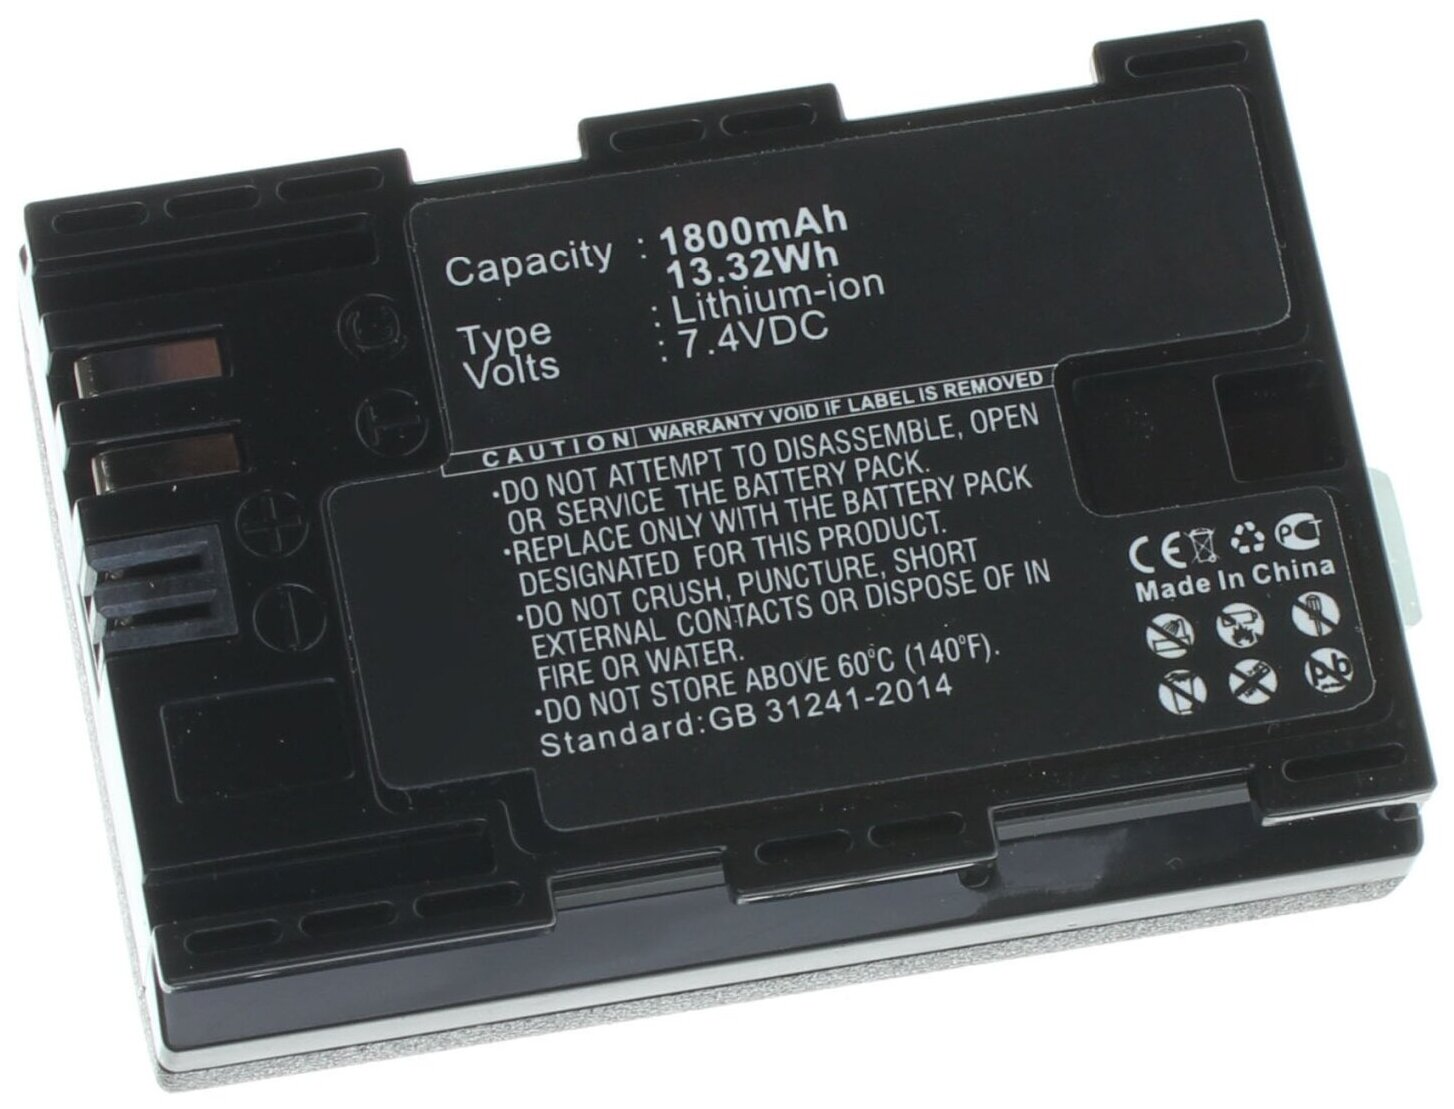 Аккумуляторная батарея iBatt 1800mAh для Canon LP-E6N, iB-F127, iB-F473, iB-F450, iB-F474